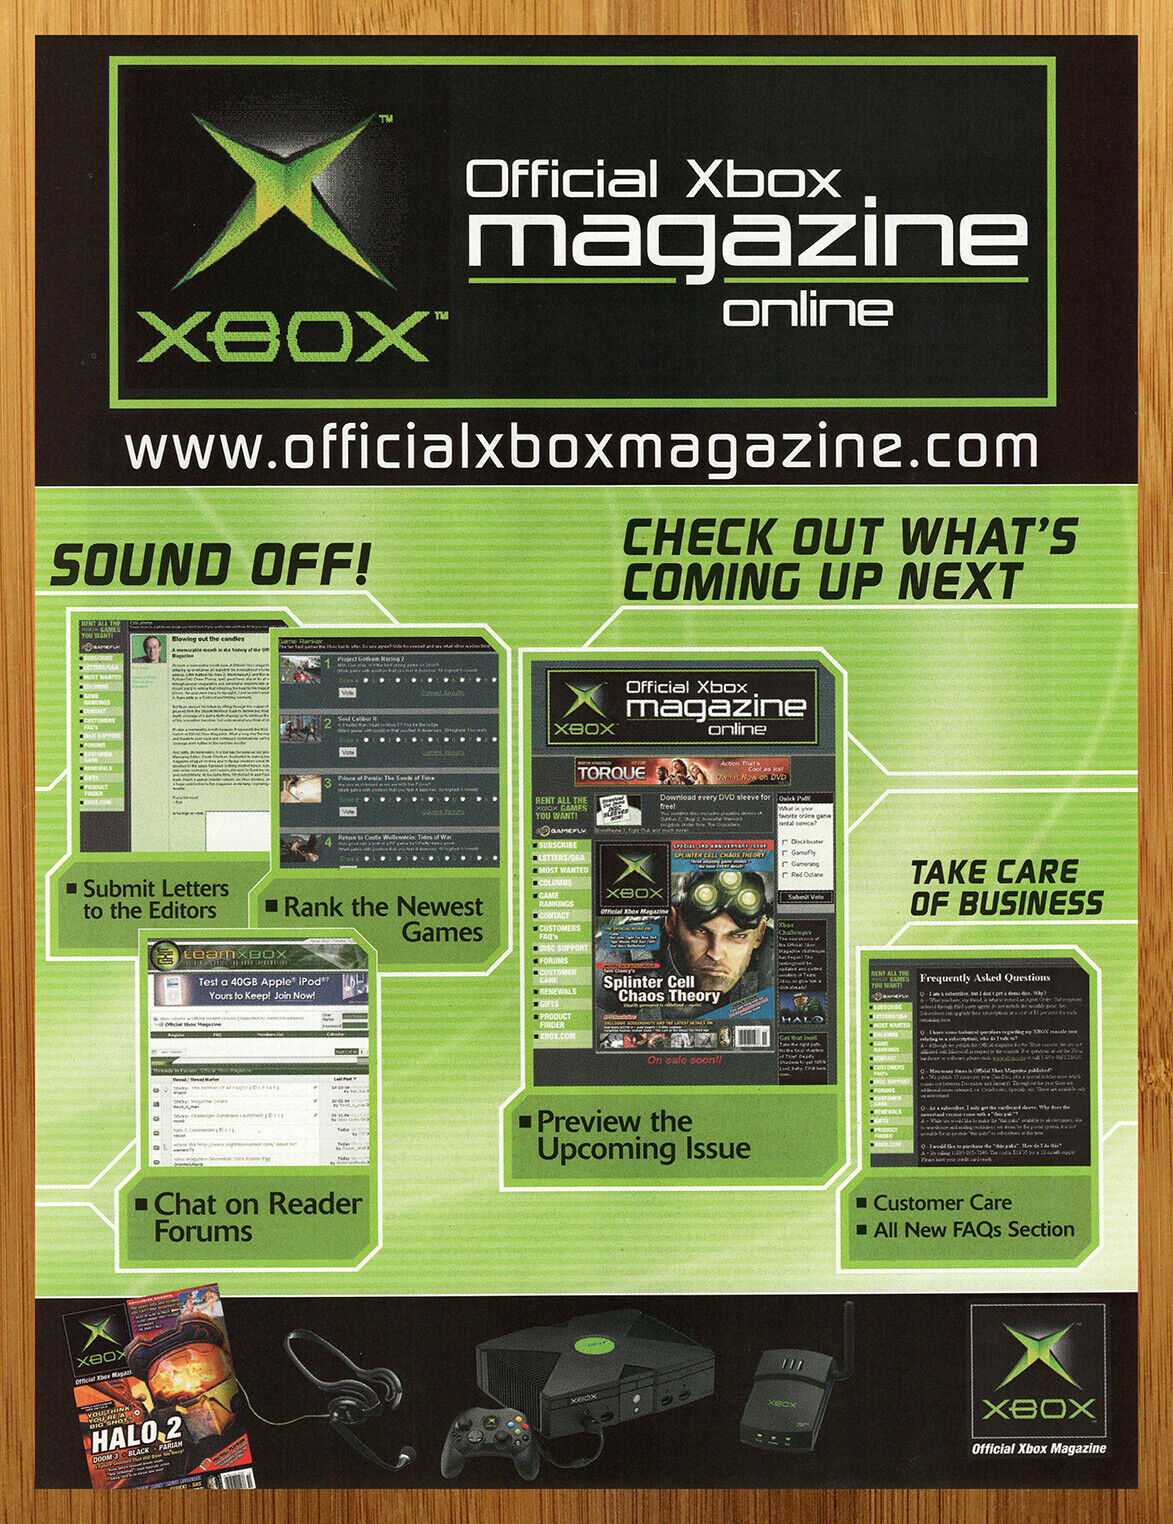 2005 Official Xbox Magazine Online Vintage Print Ad/Poster Promo Art Halo 2 Era